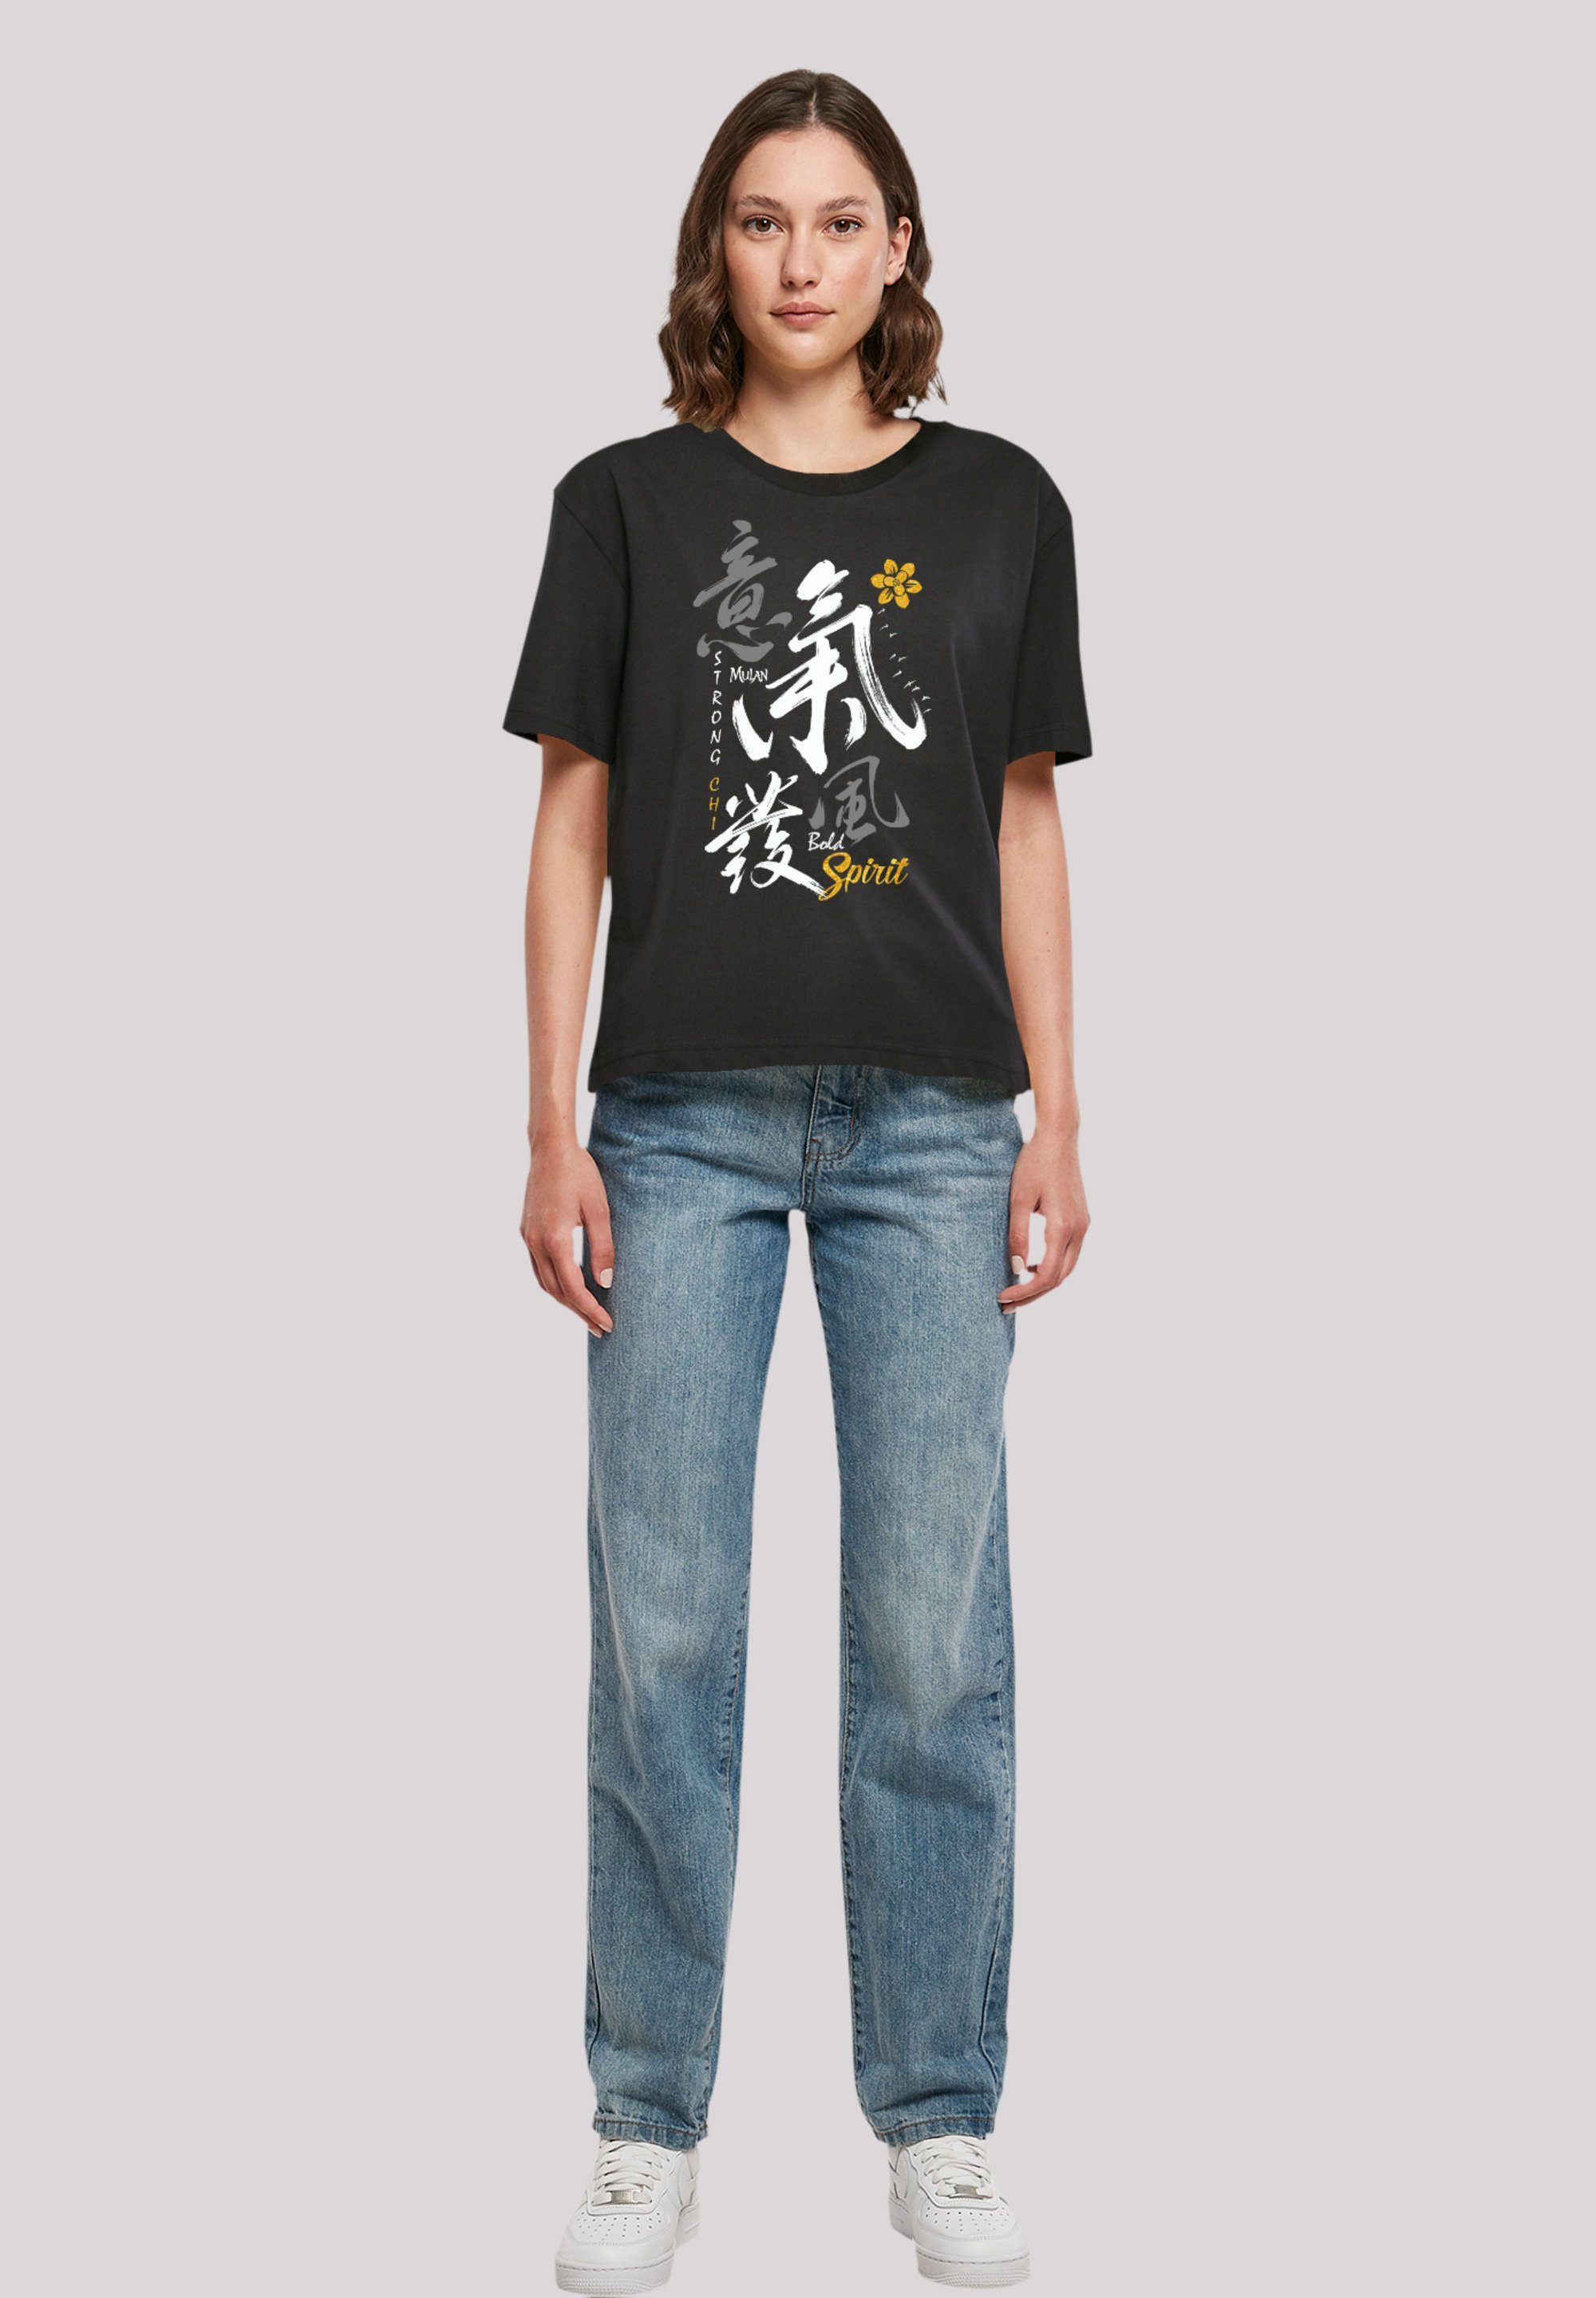 F4NT4STIC T-Shirt Disney Premium Mulan Spirit Qualität Bold